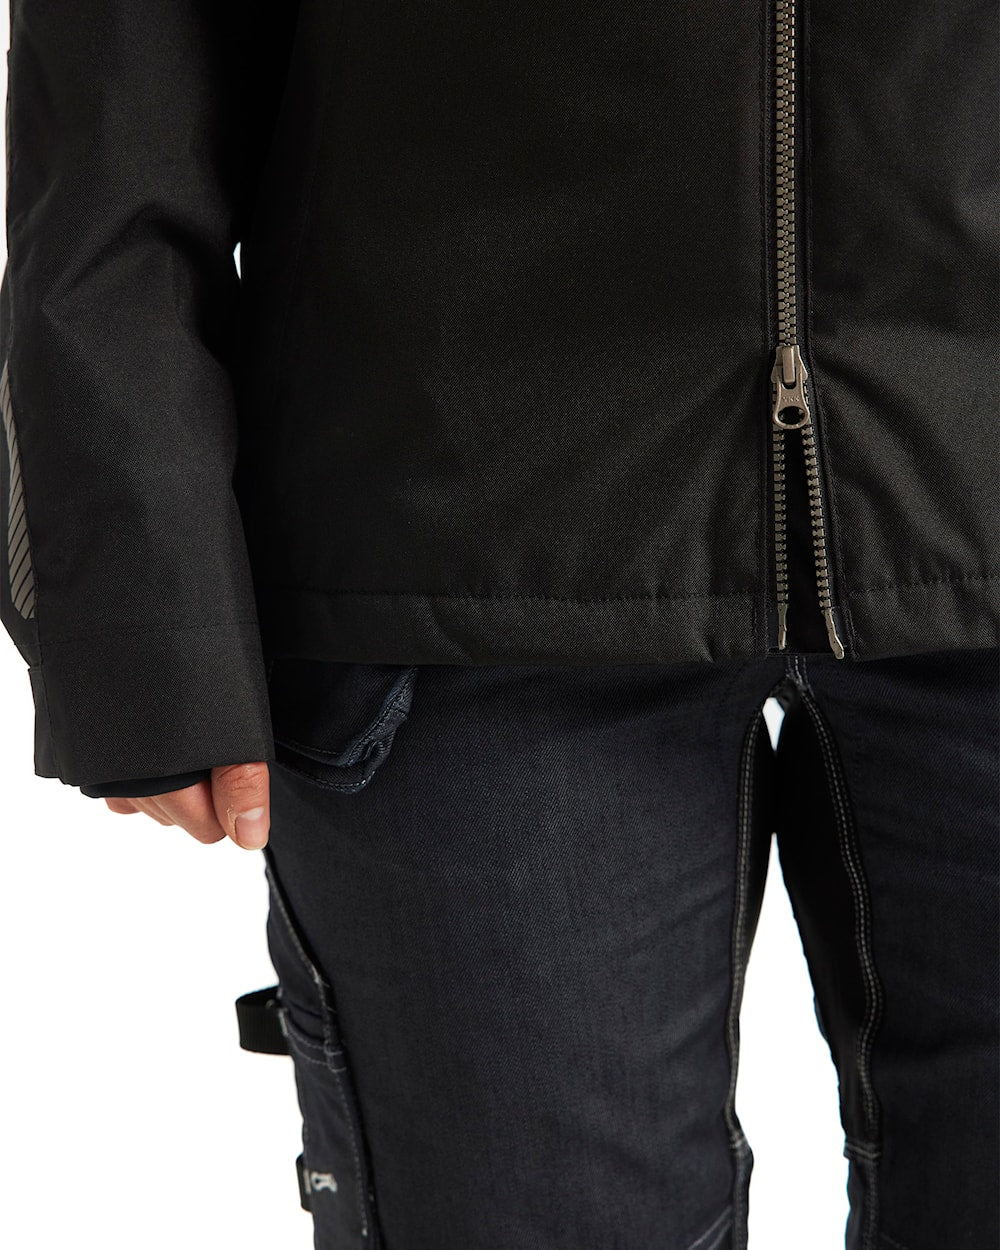 Blaklader Women's Lightweight Lined Functional Jacket 4972 #colour_black